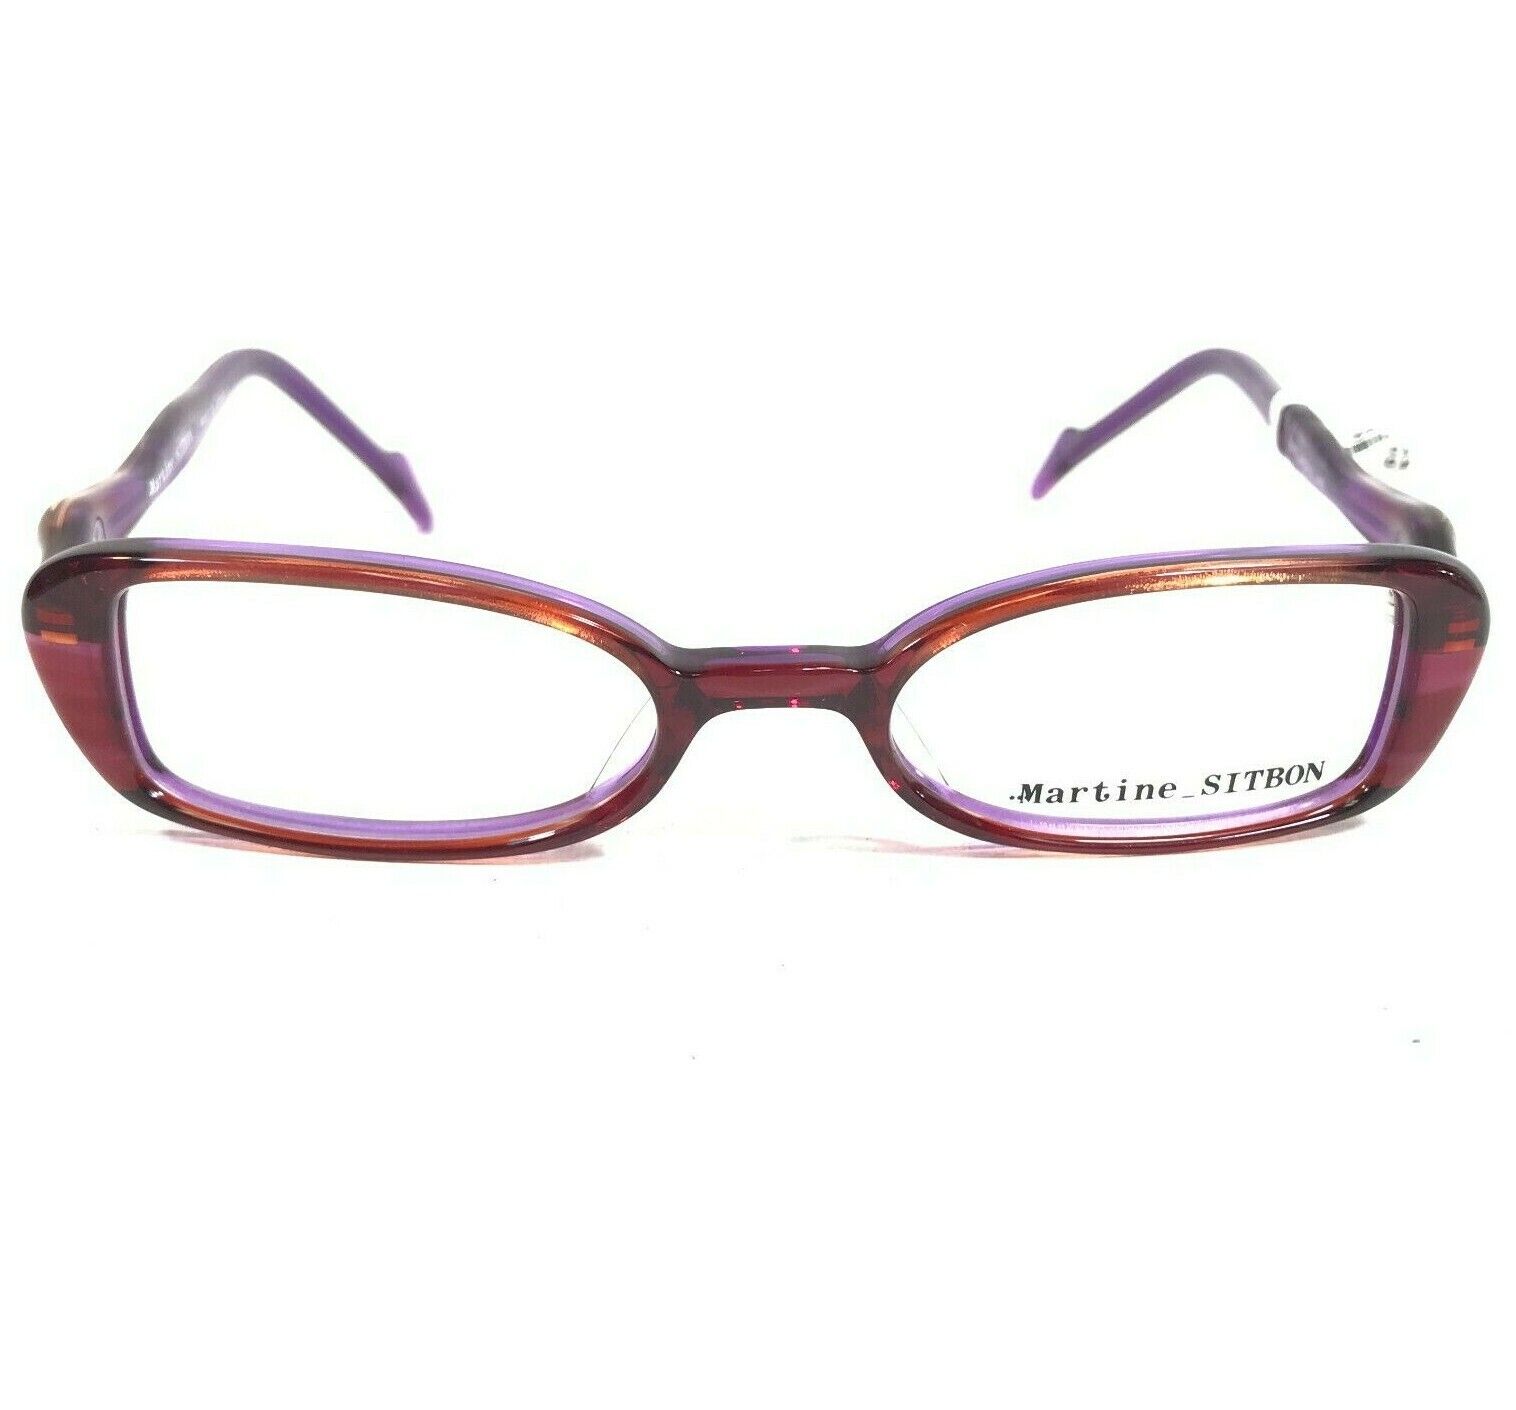 Martine Sitbon 6241 Eyeglasses Frames Clear Purple Red Rectangular Cat Eye 143